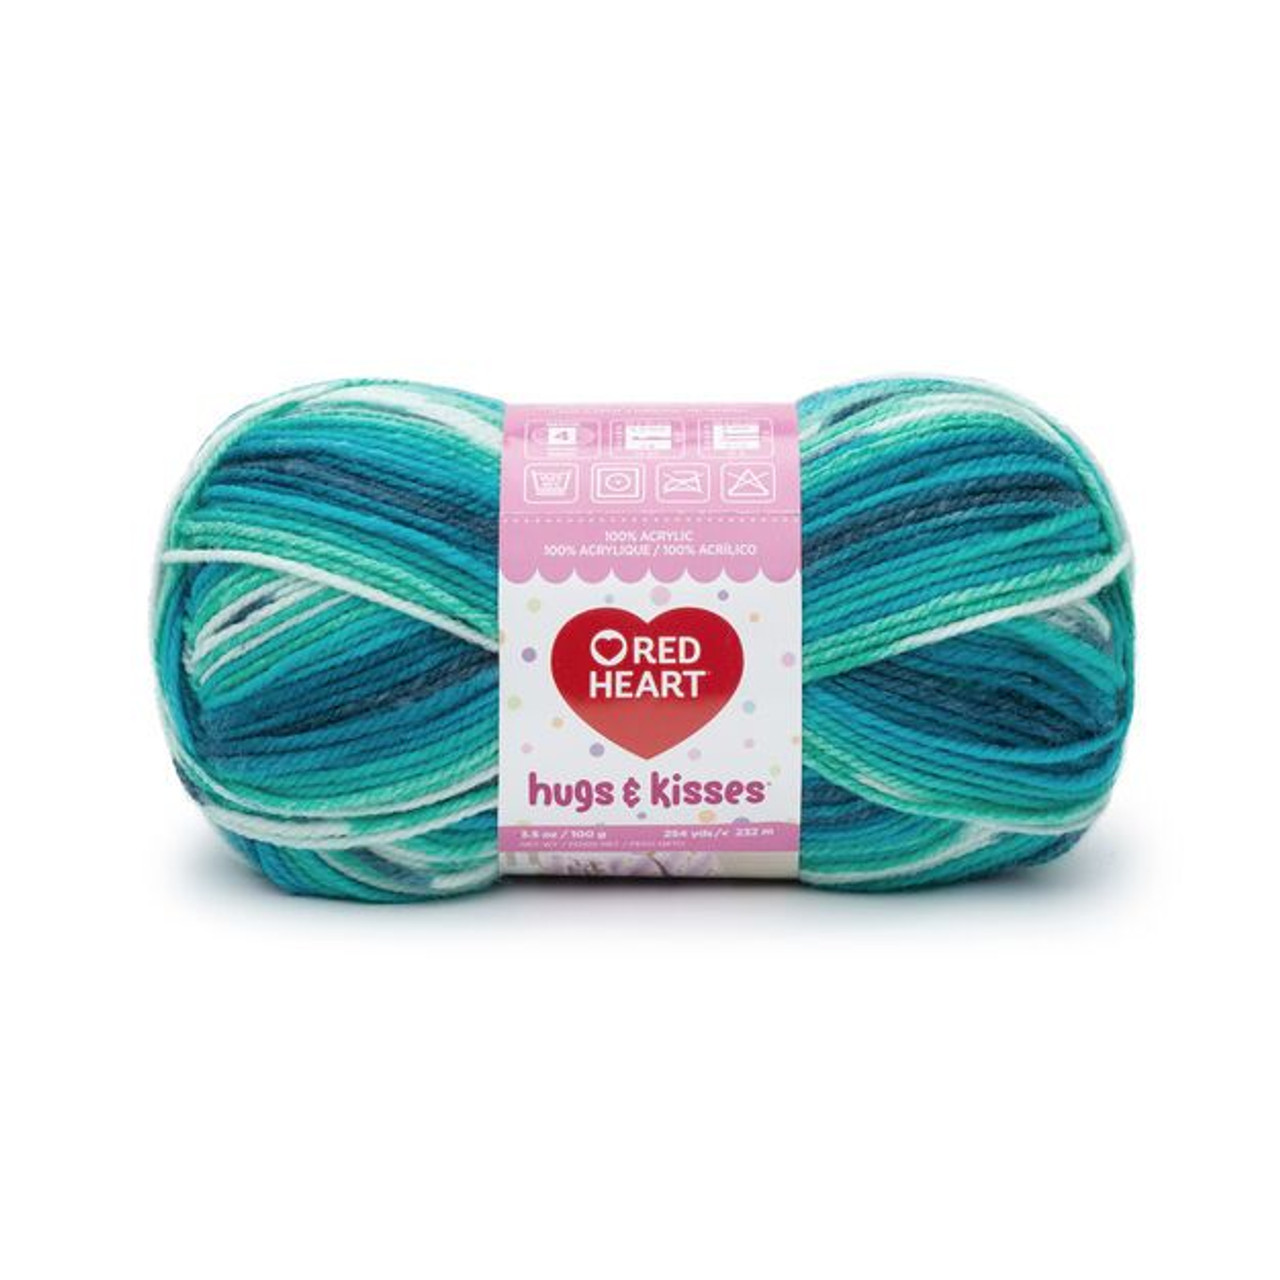 Red Heart Hugs & Kisses Mixed Mints Knitting & Crochet Yarn